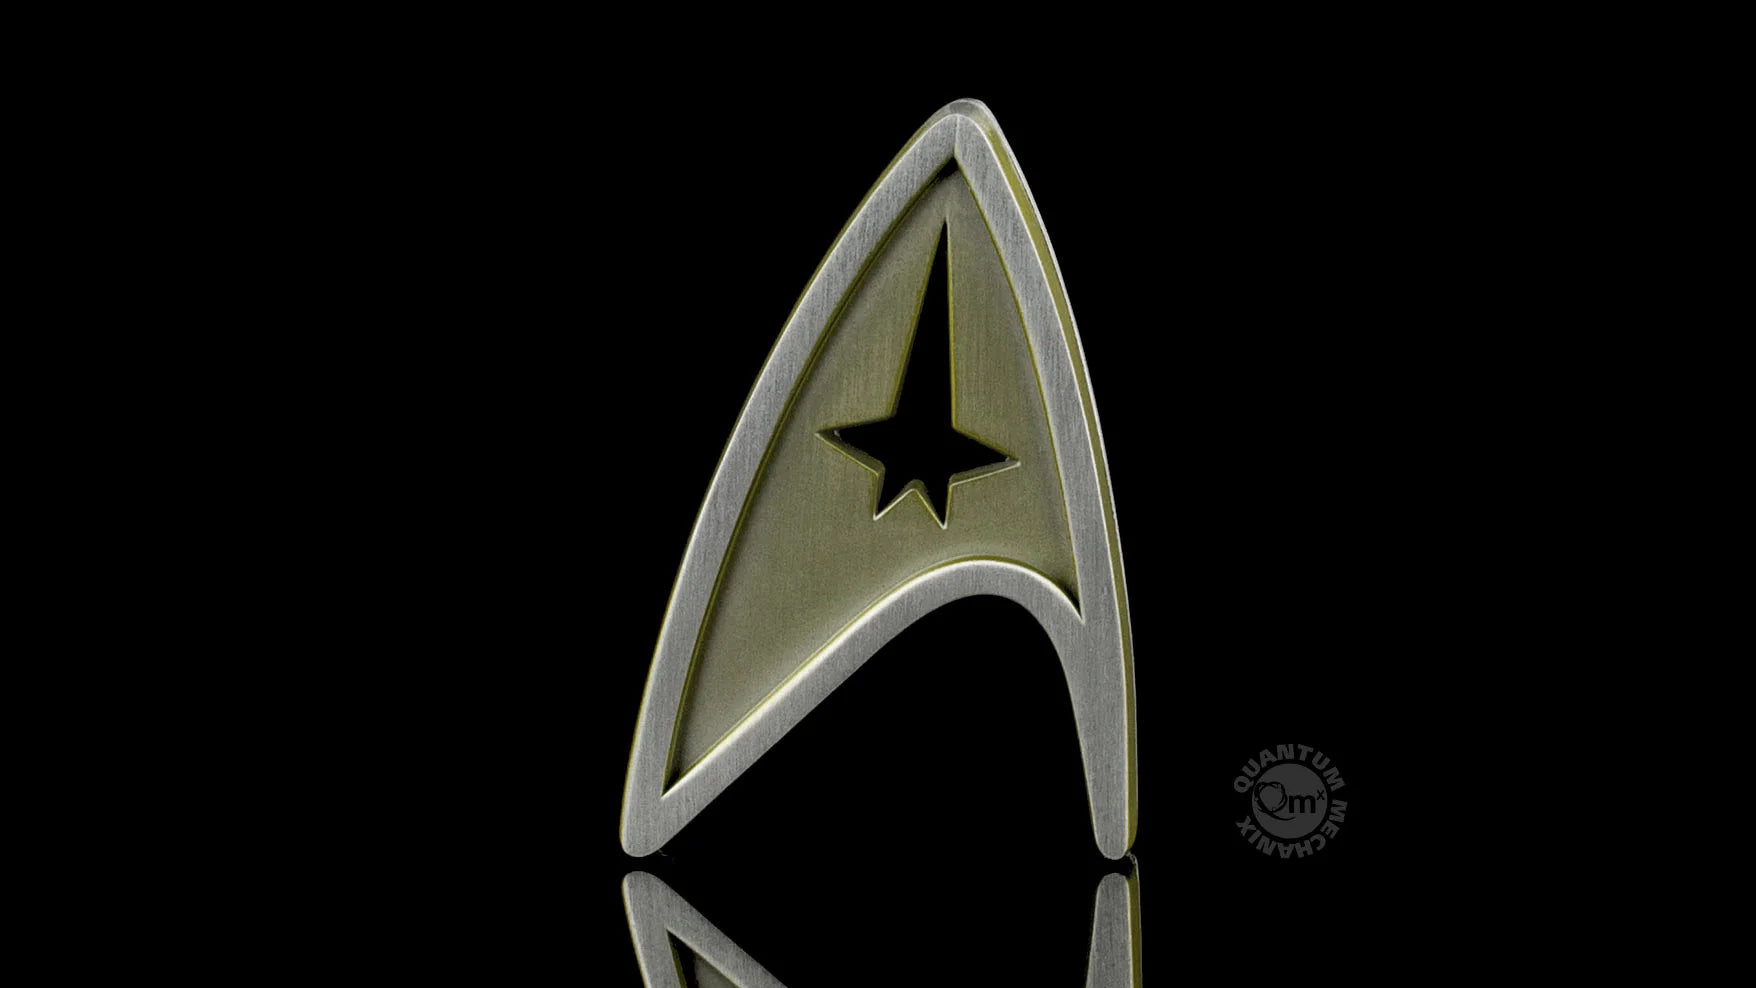 Star Trek Starfleet Command Division Magnetic Badge Replica